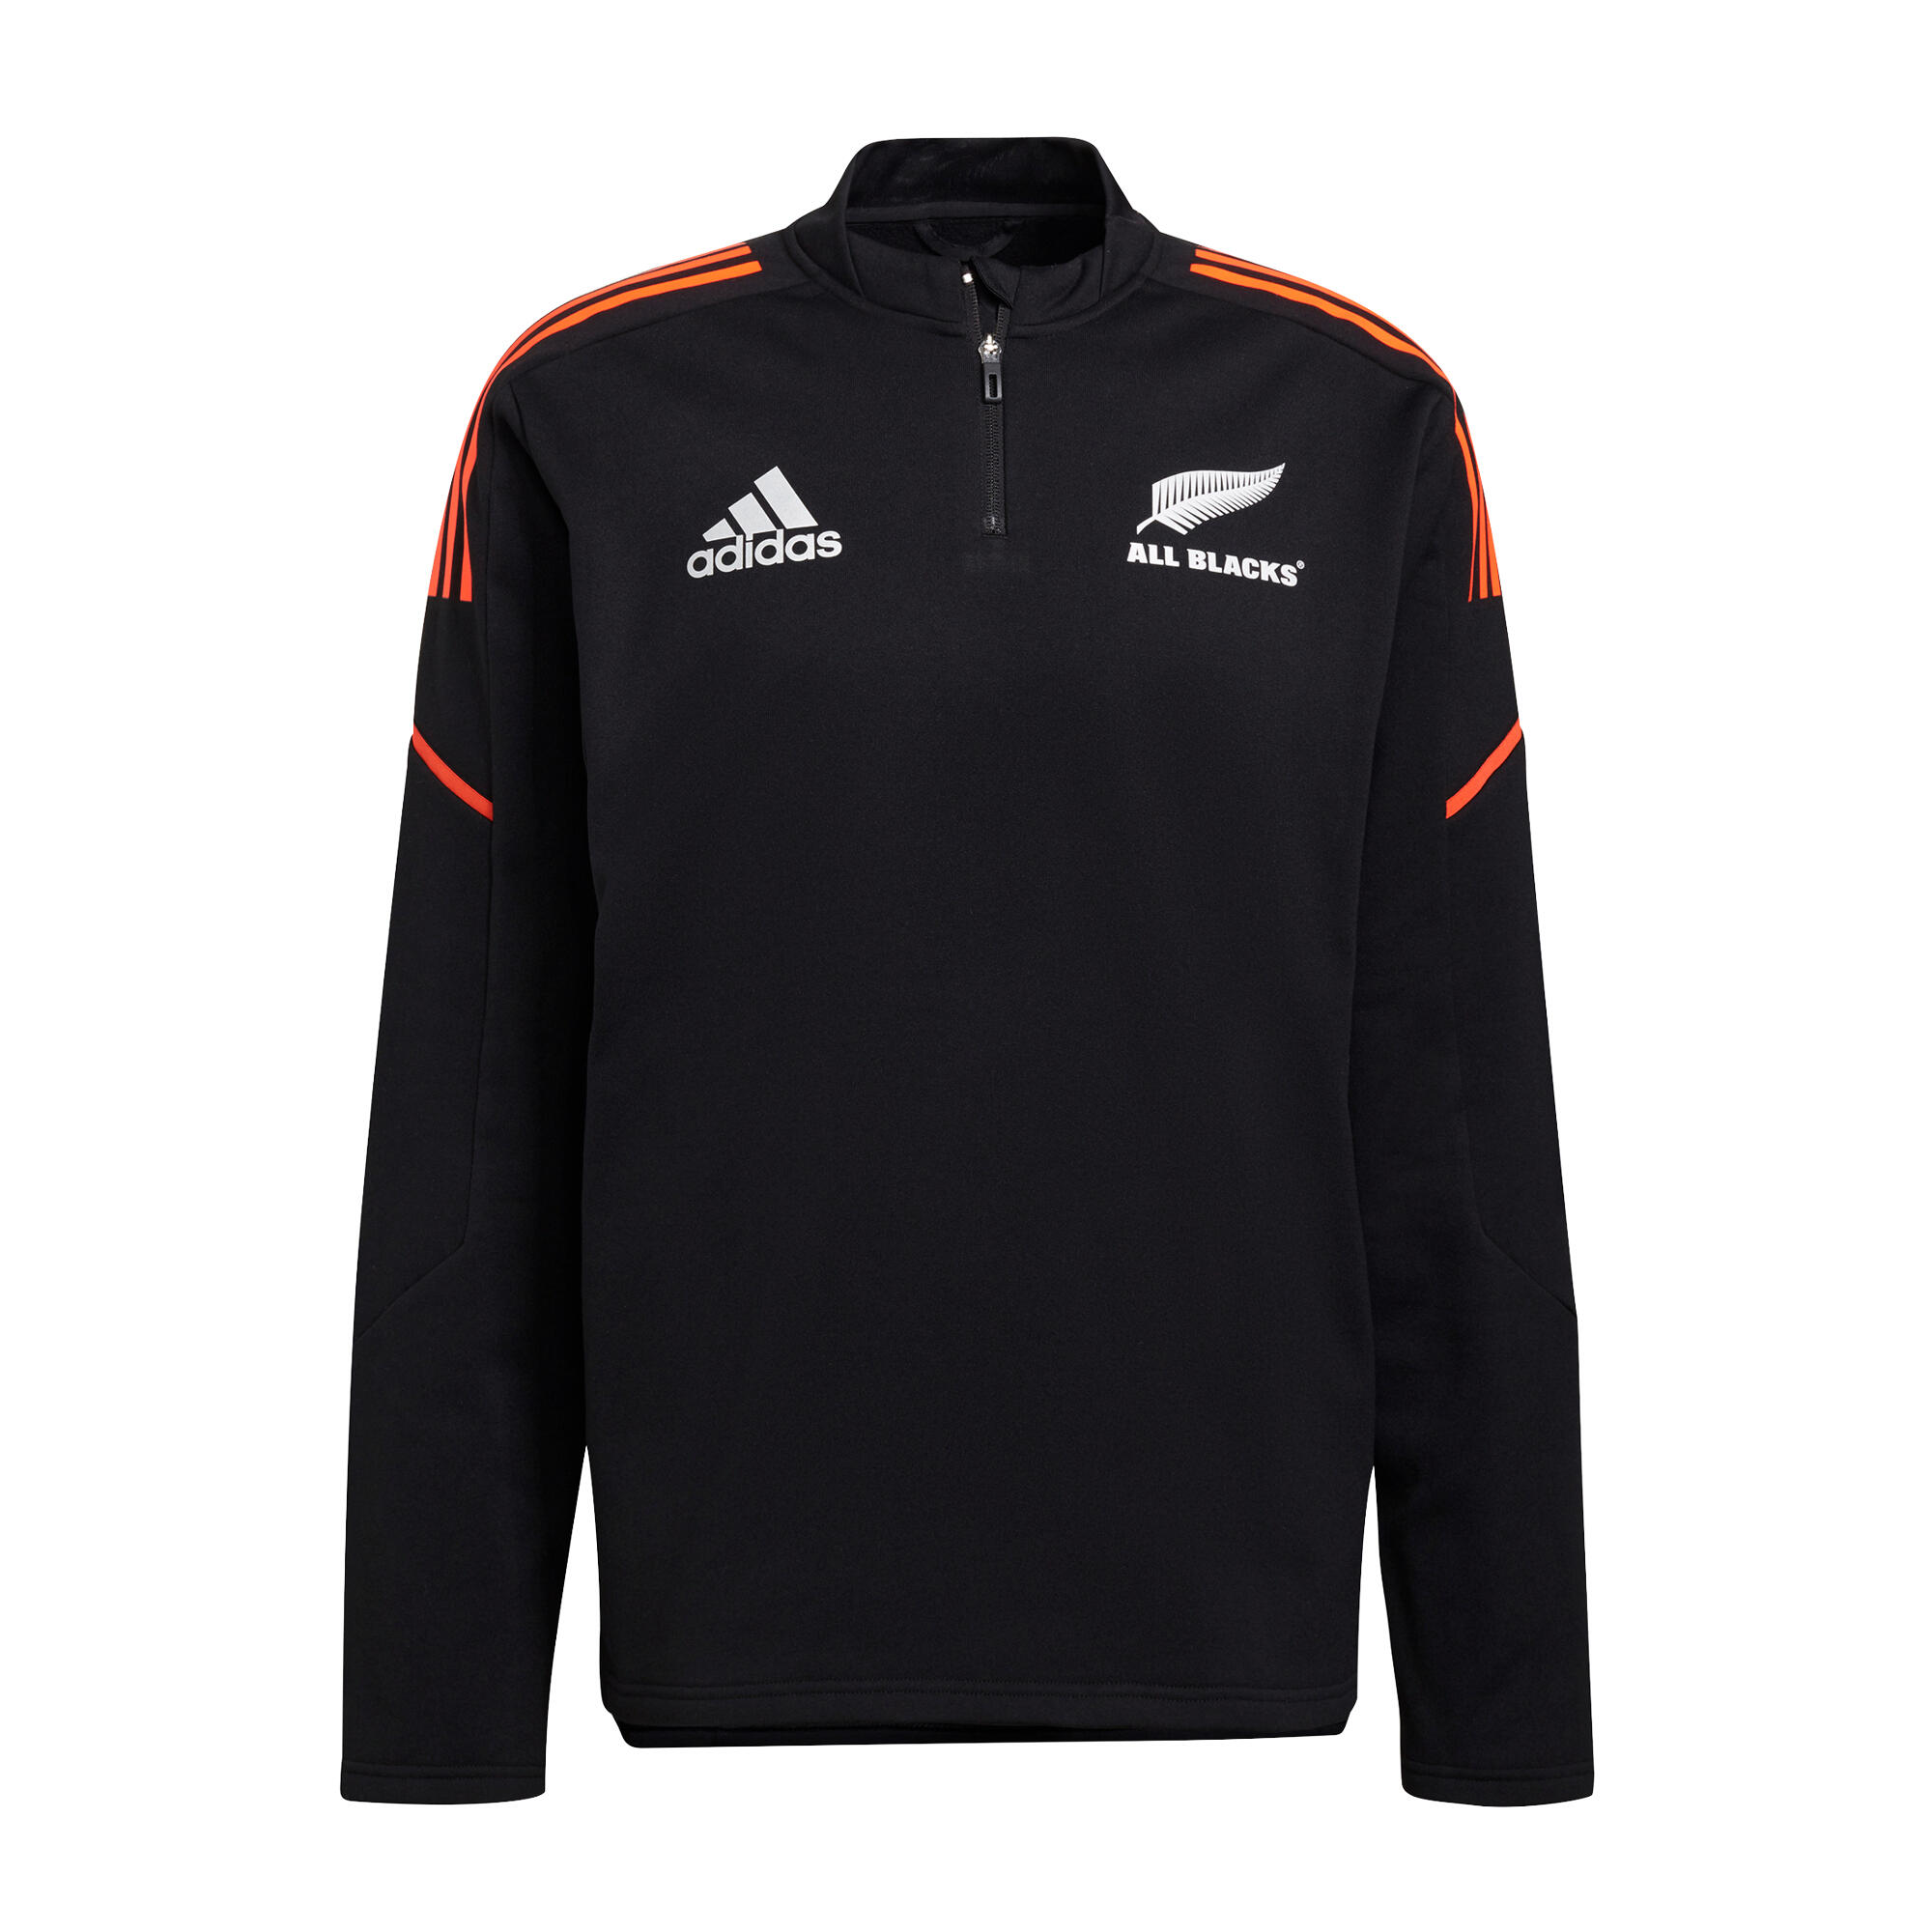 ADIDAS Adidas New Zealand All Blacks Mens Rugby Fleece